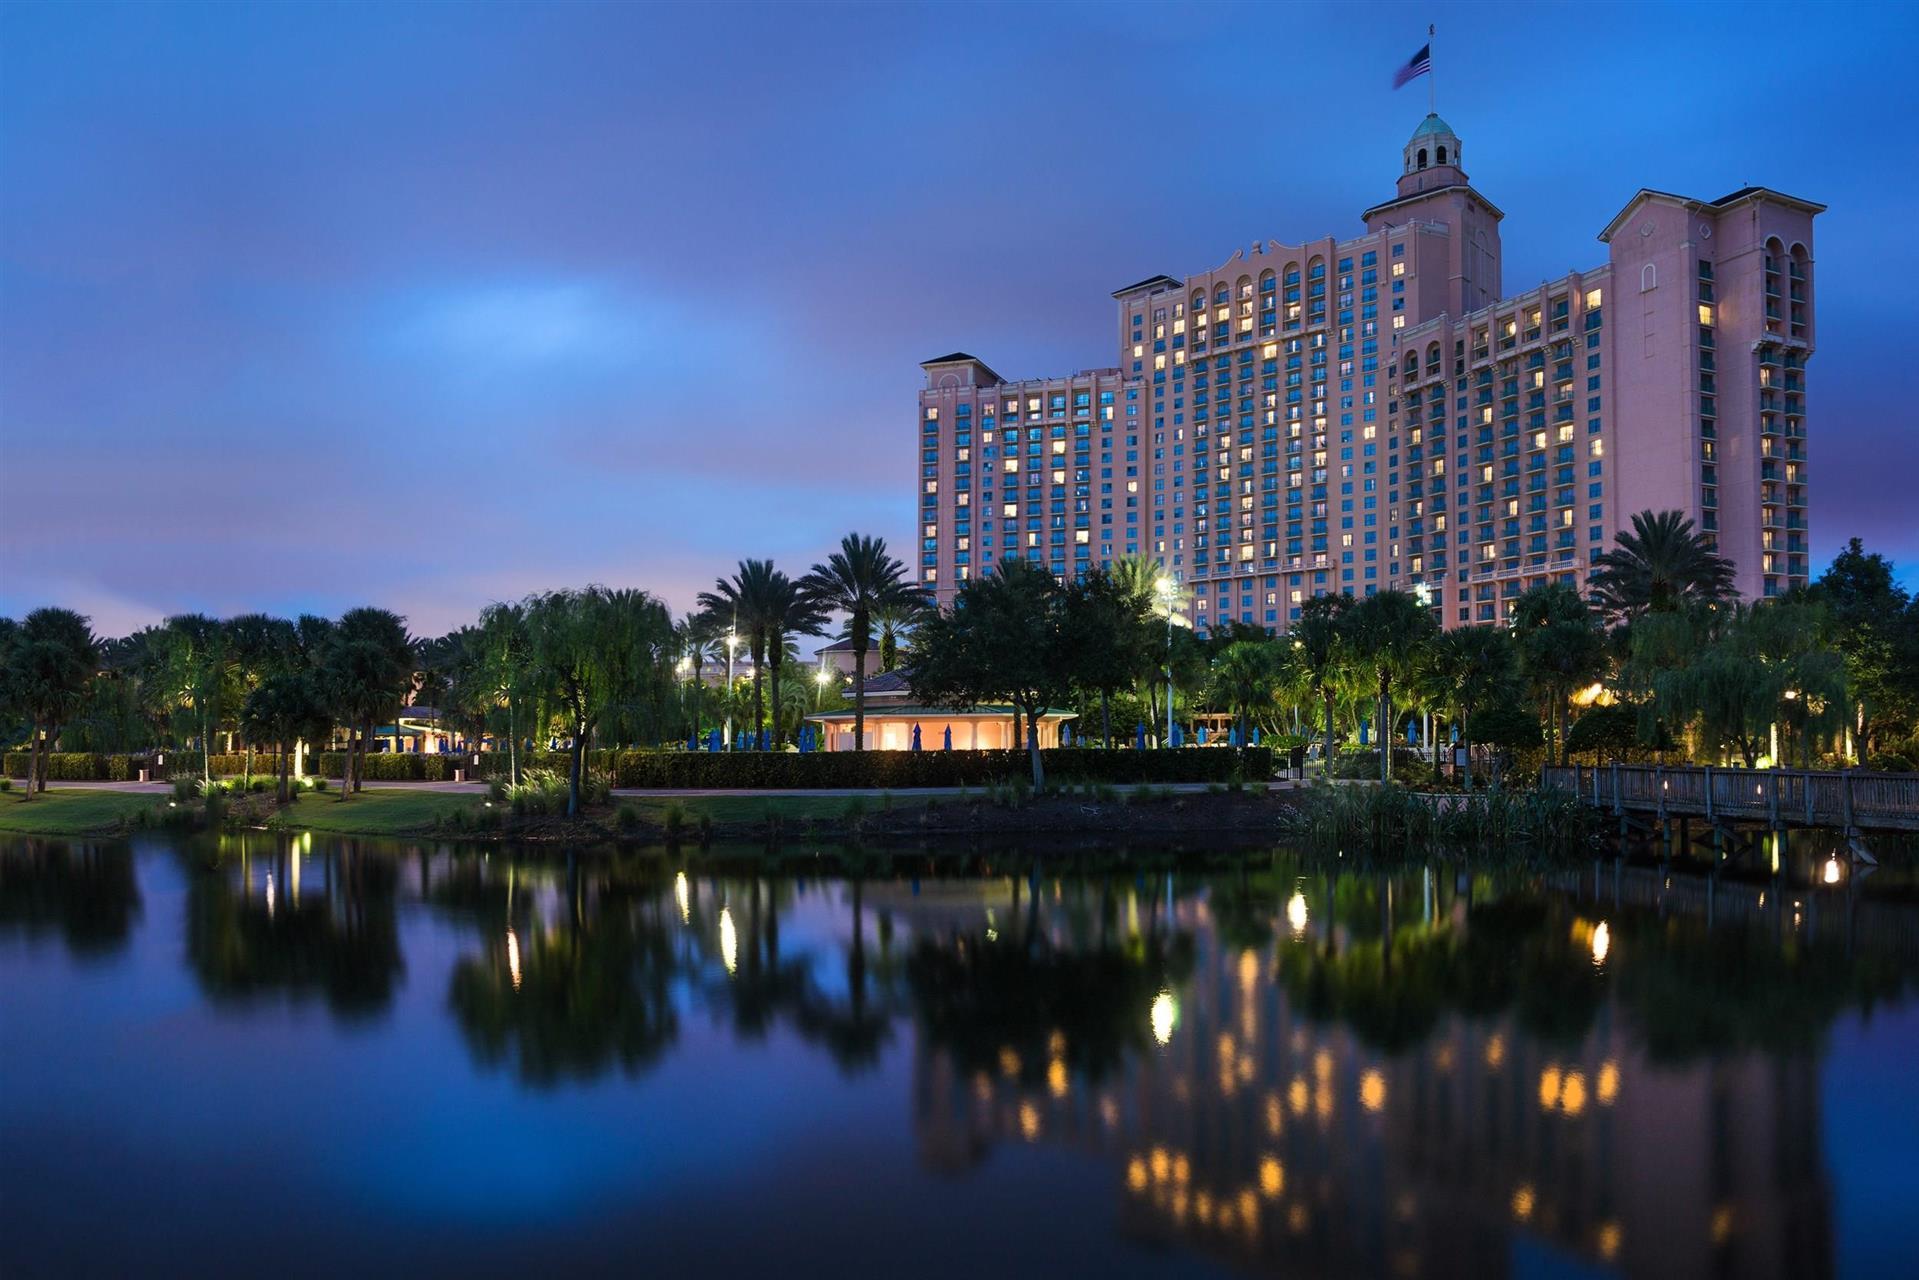 JW Marriott Orlando, Grande Lakes in Orlando, FL